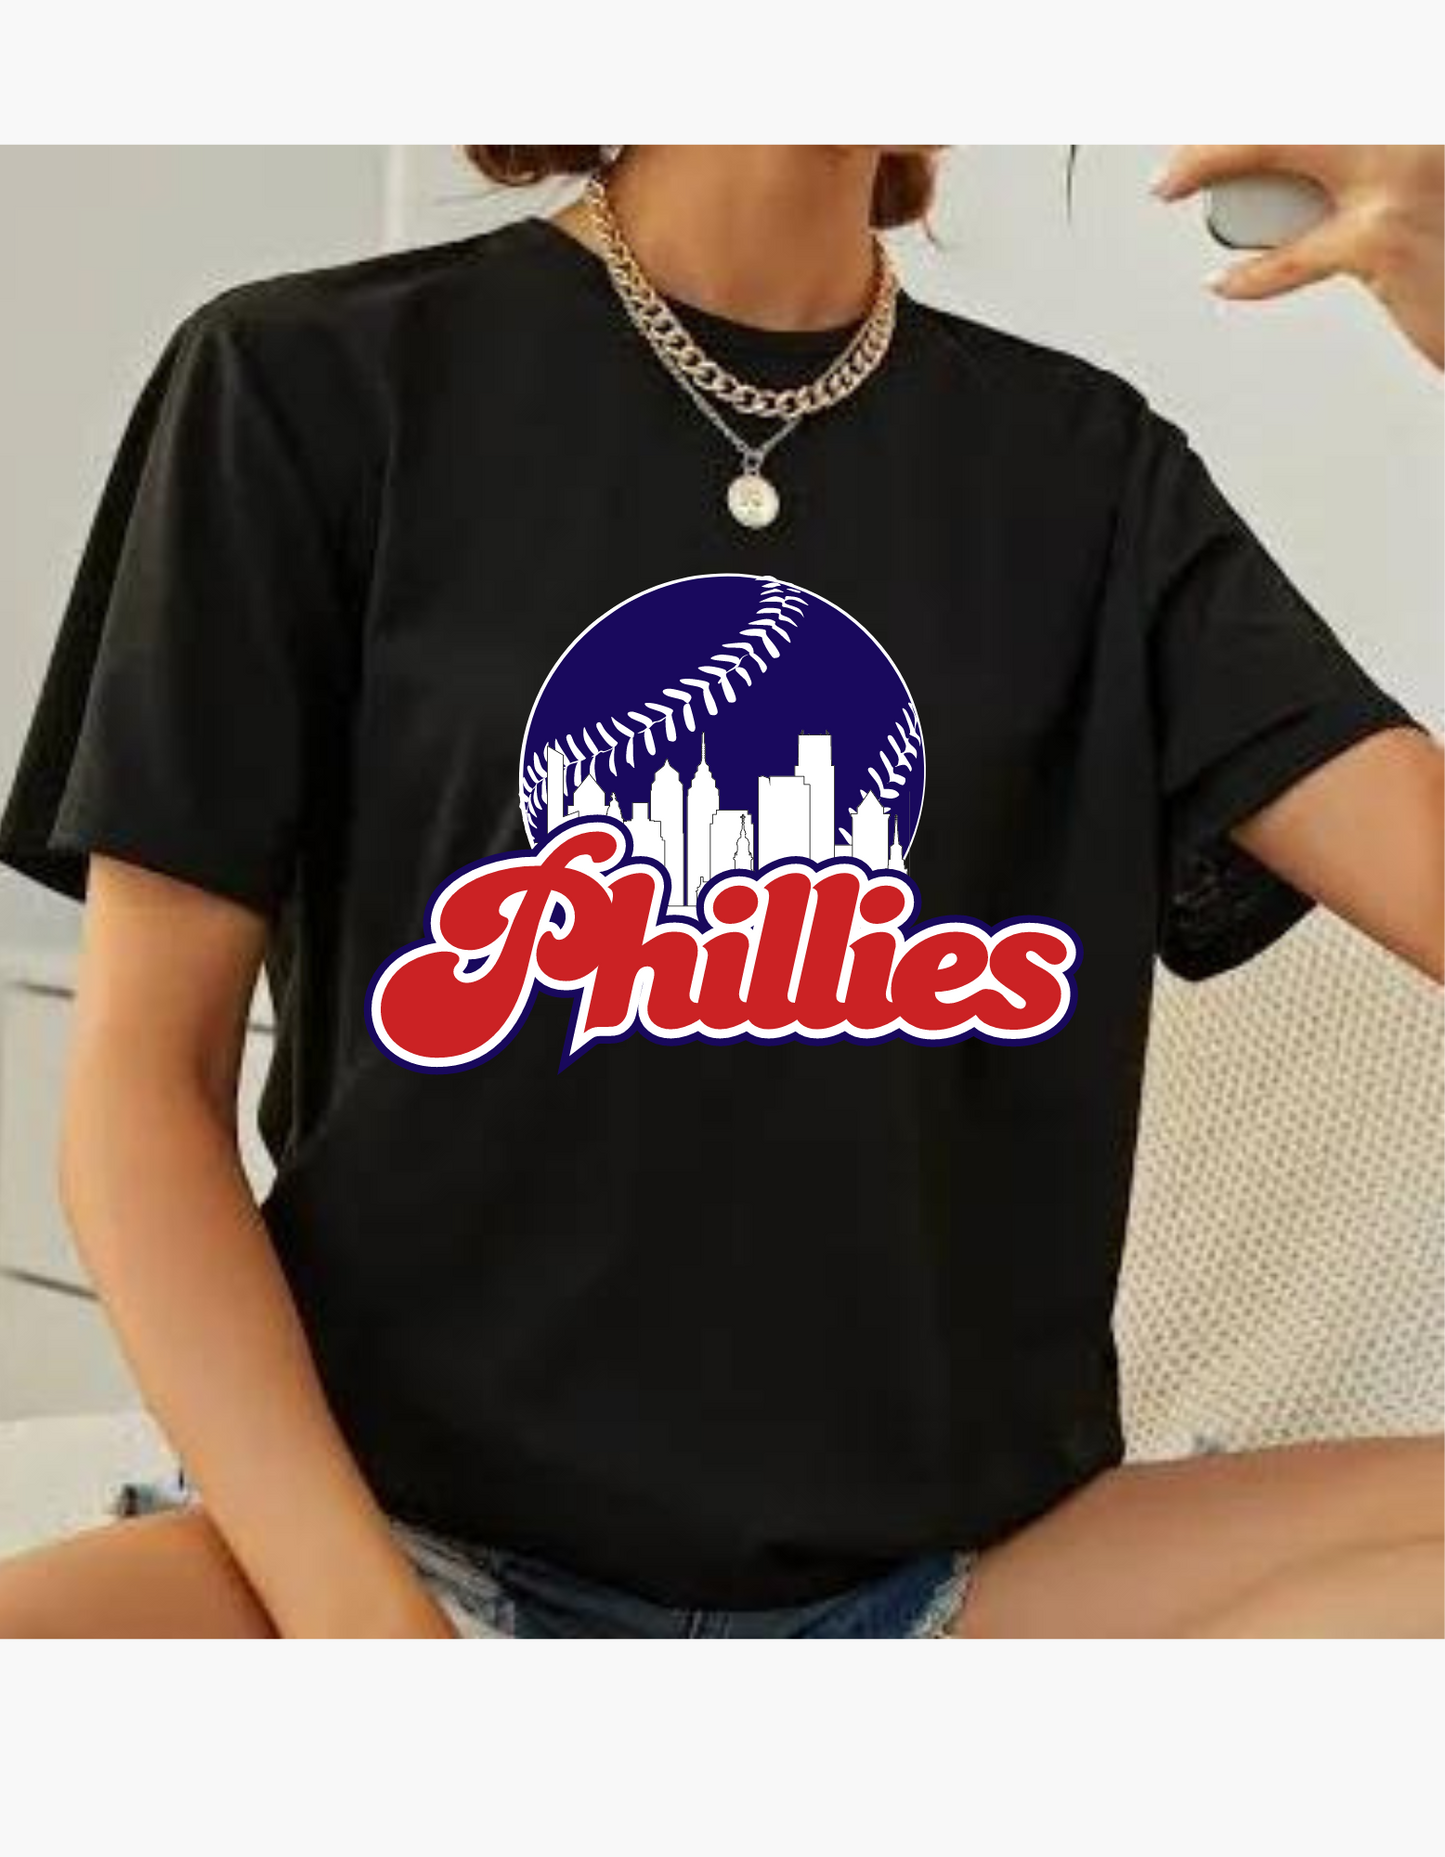 Phillies Skyline and baseball t shirt